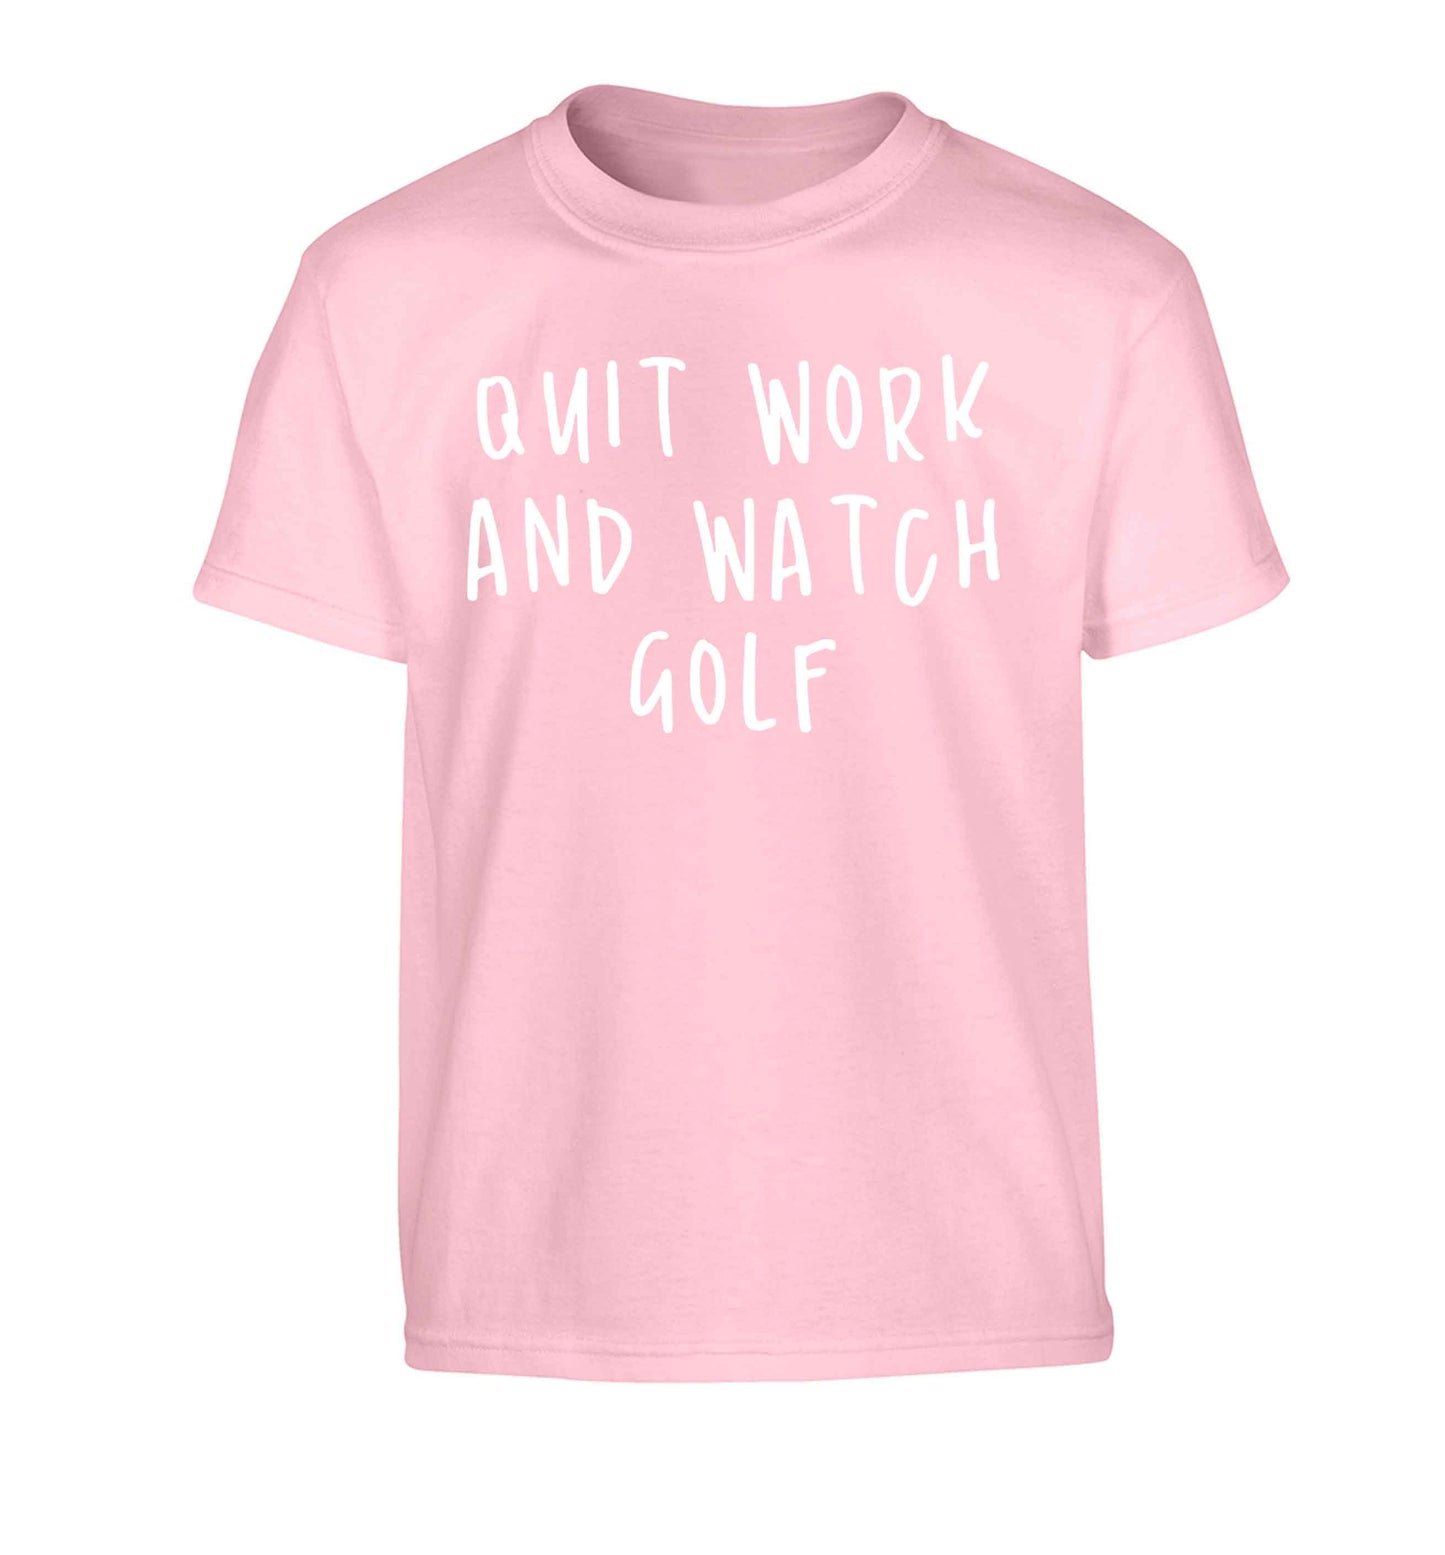 Quit work and watch golf Children's light pink Tshirt 12-13 Years